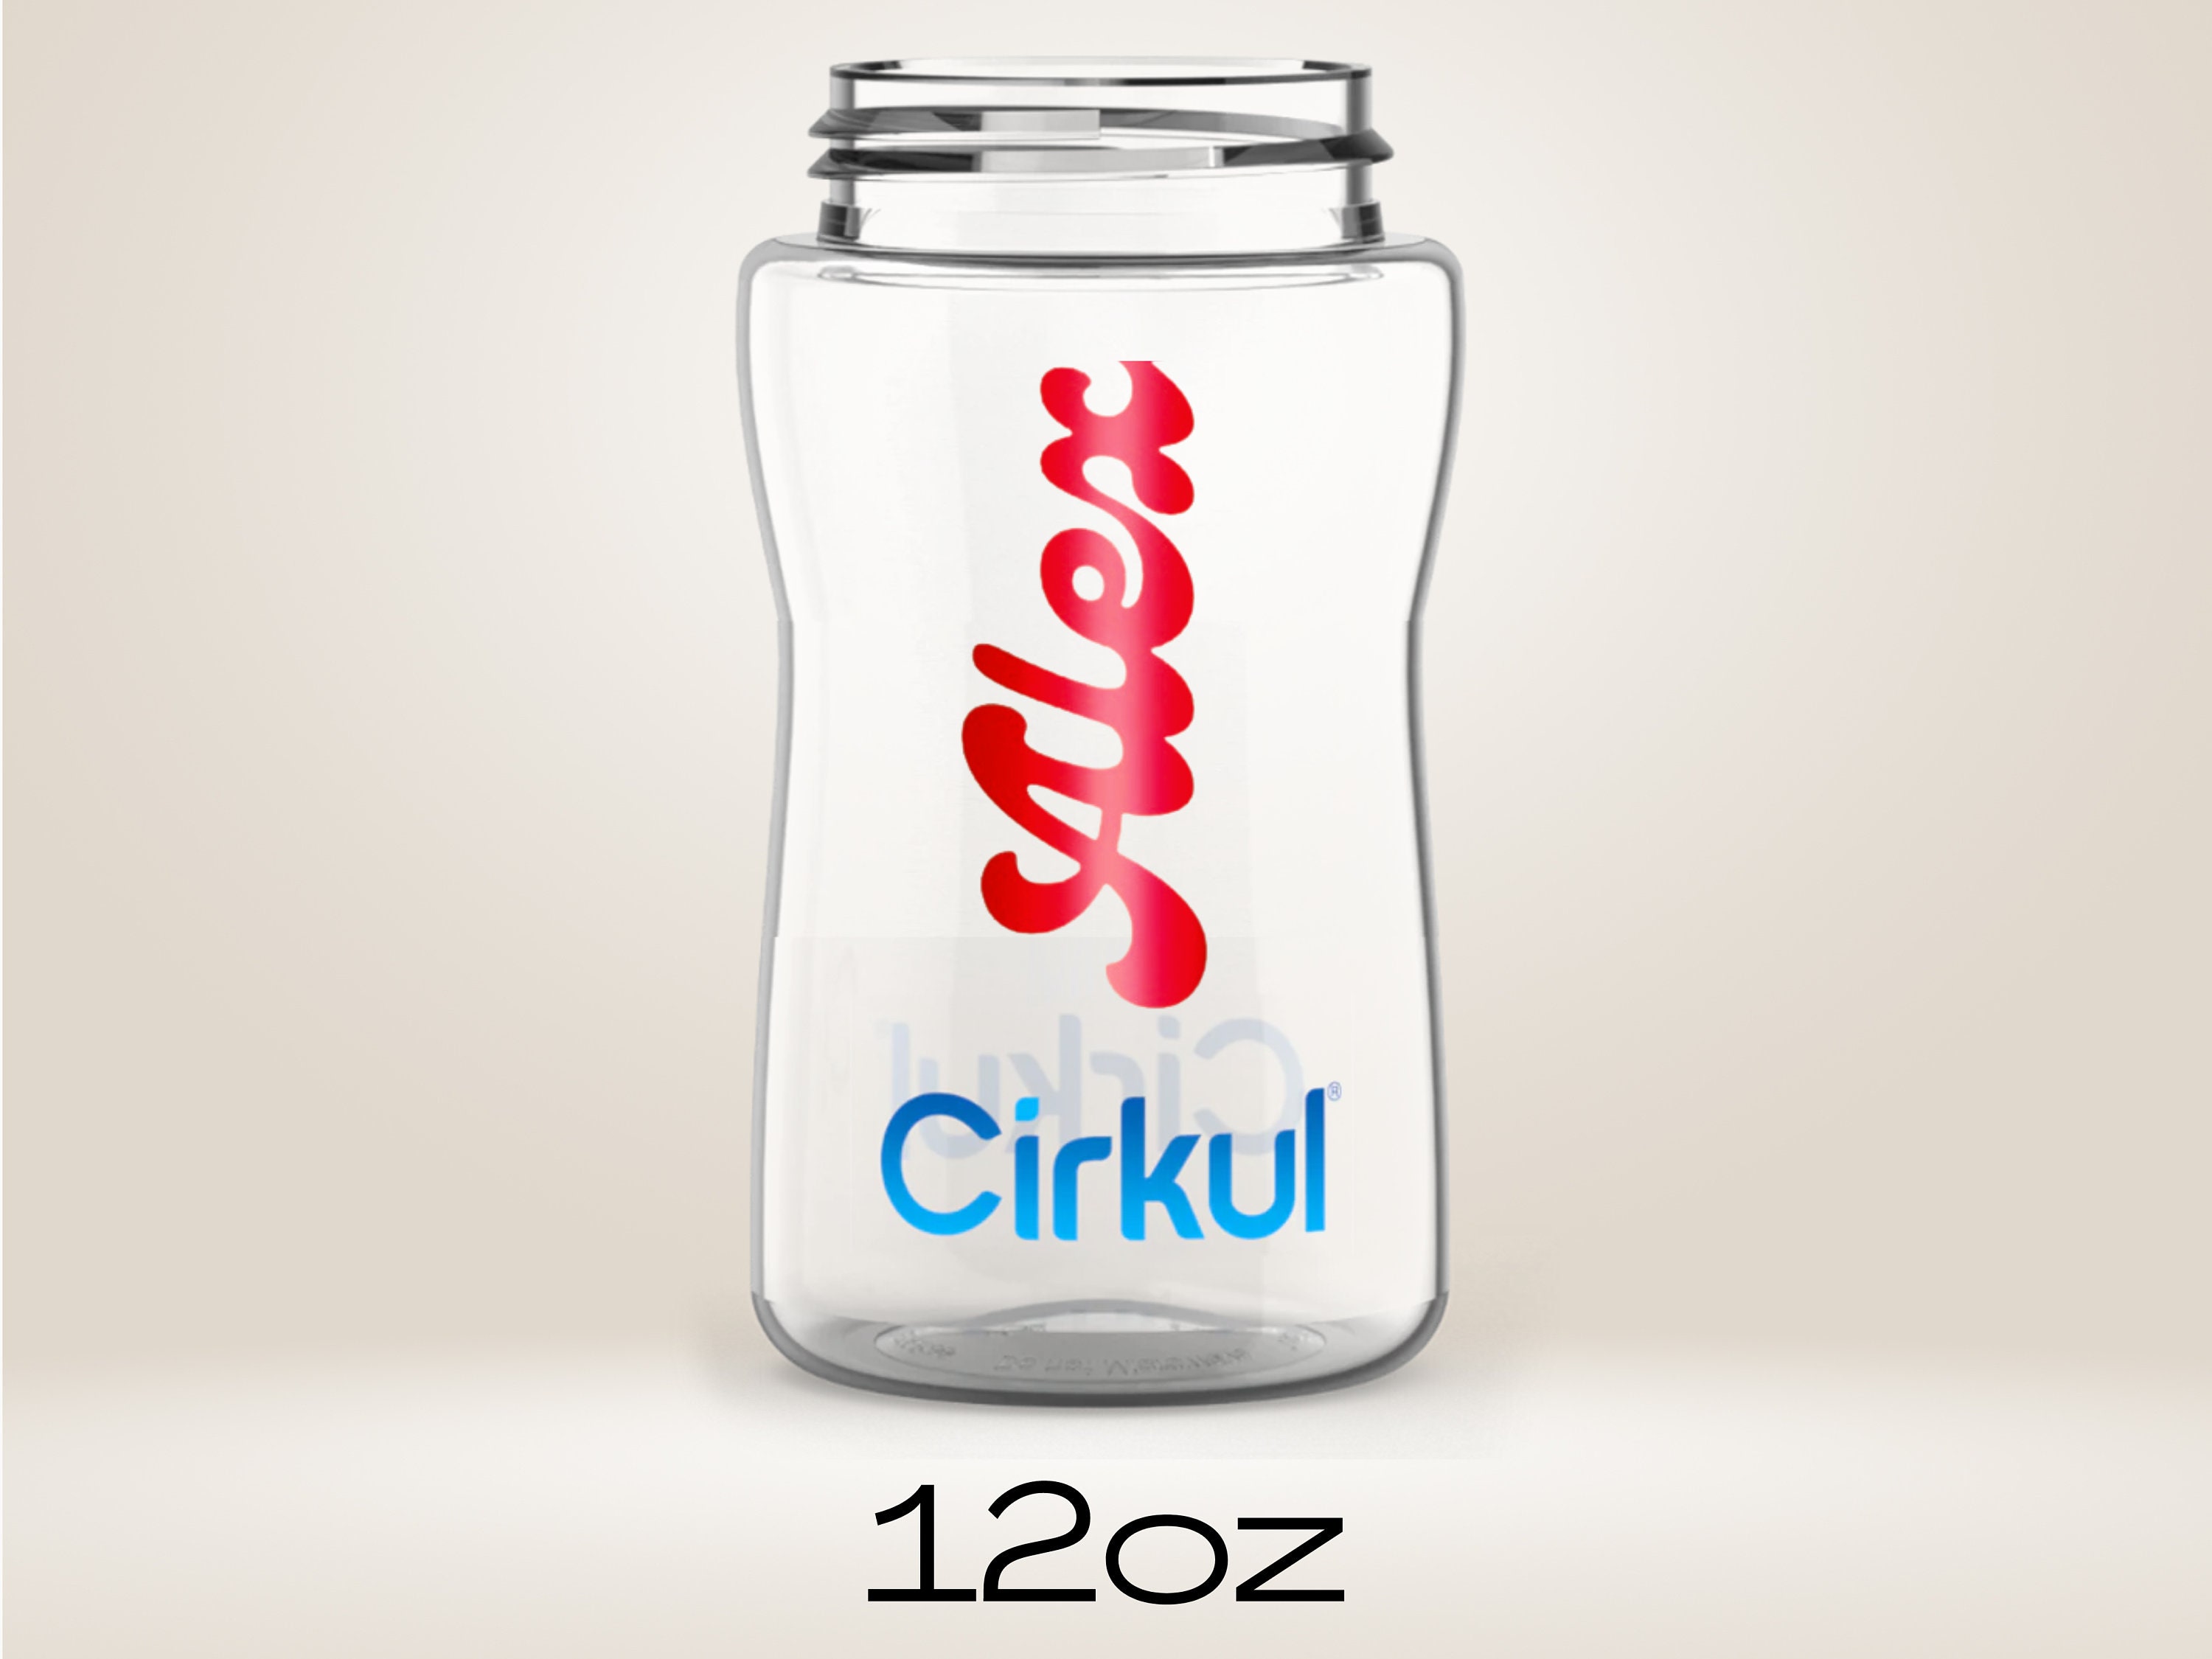 Name Label for Cirkul Bottle 22oz, Metallic Finish, Personalize Your Cirkul  Water Bottle, Quality Permanent Vinyl Sticker, Water Resistant -  Hong  Kong